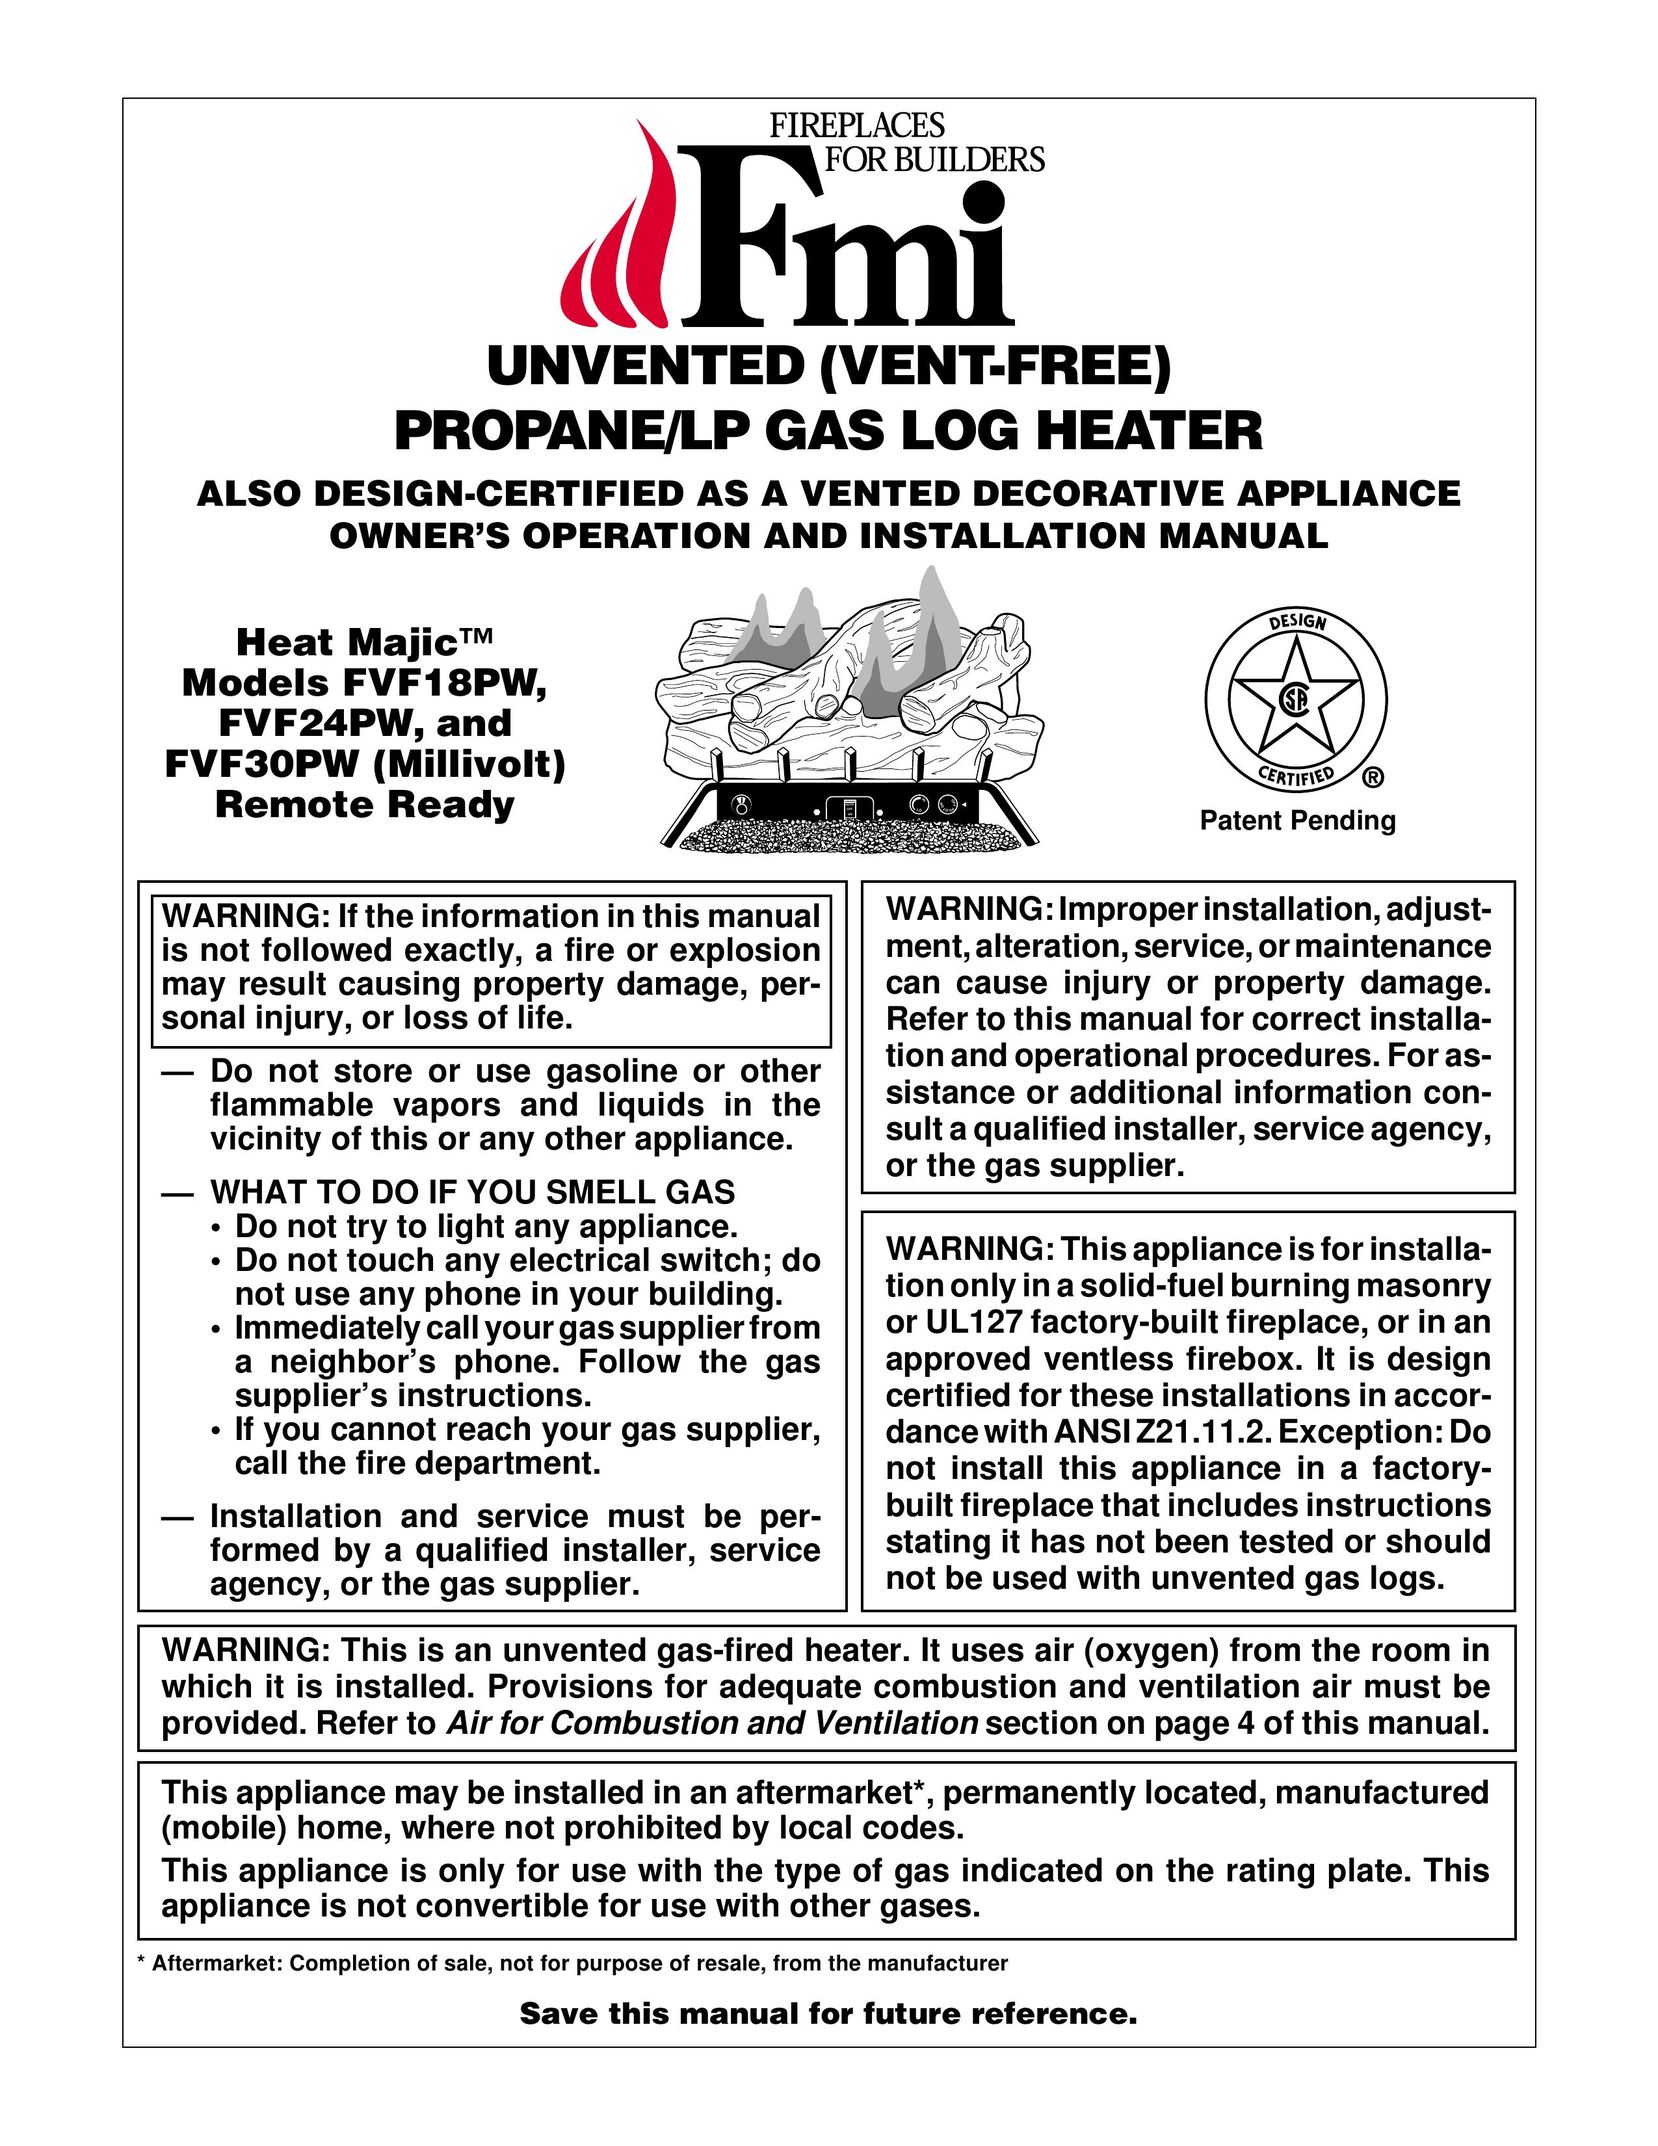 FMI FVF24PW Gas Heater User Manual